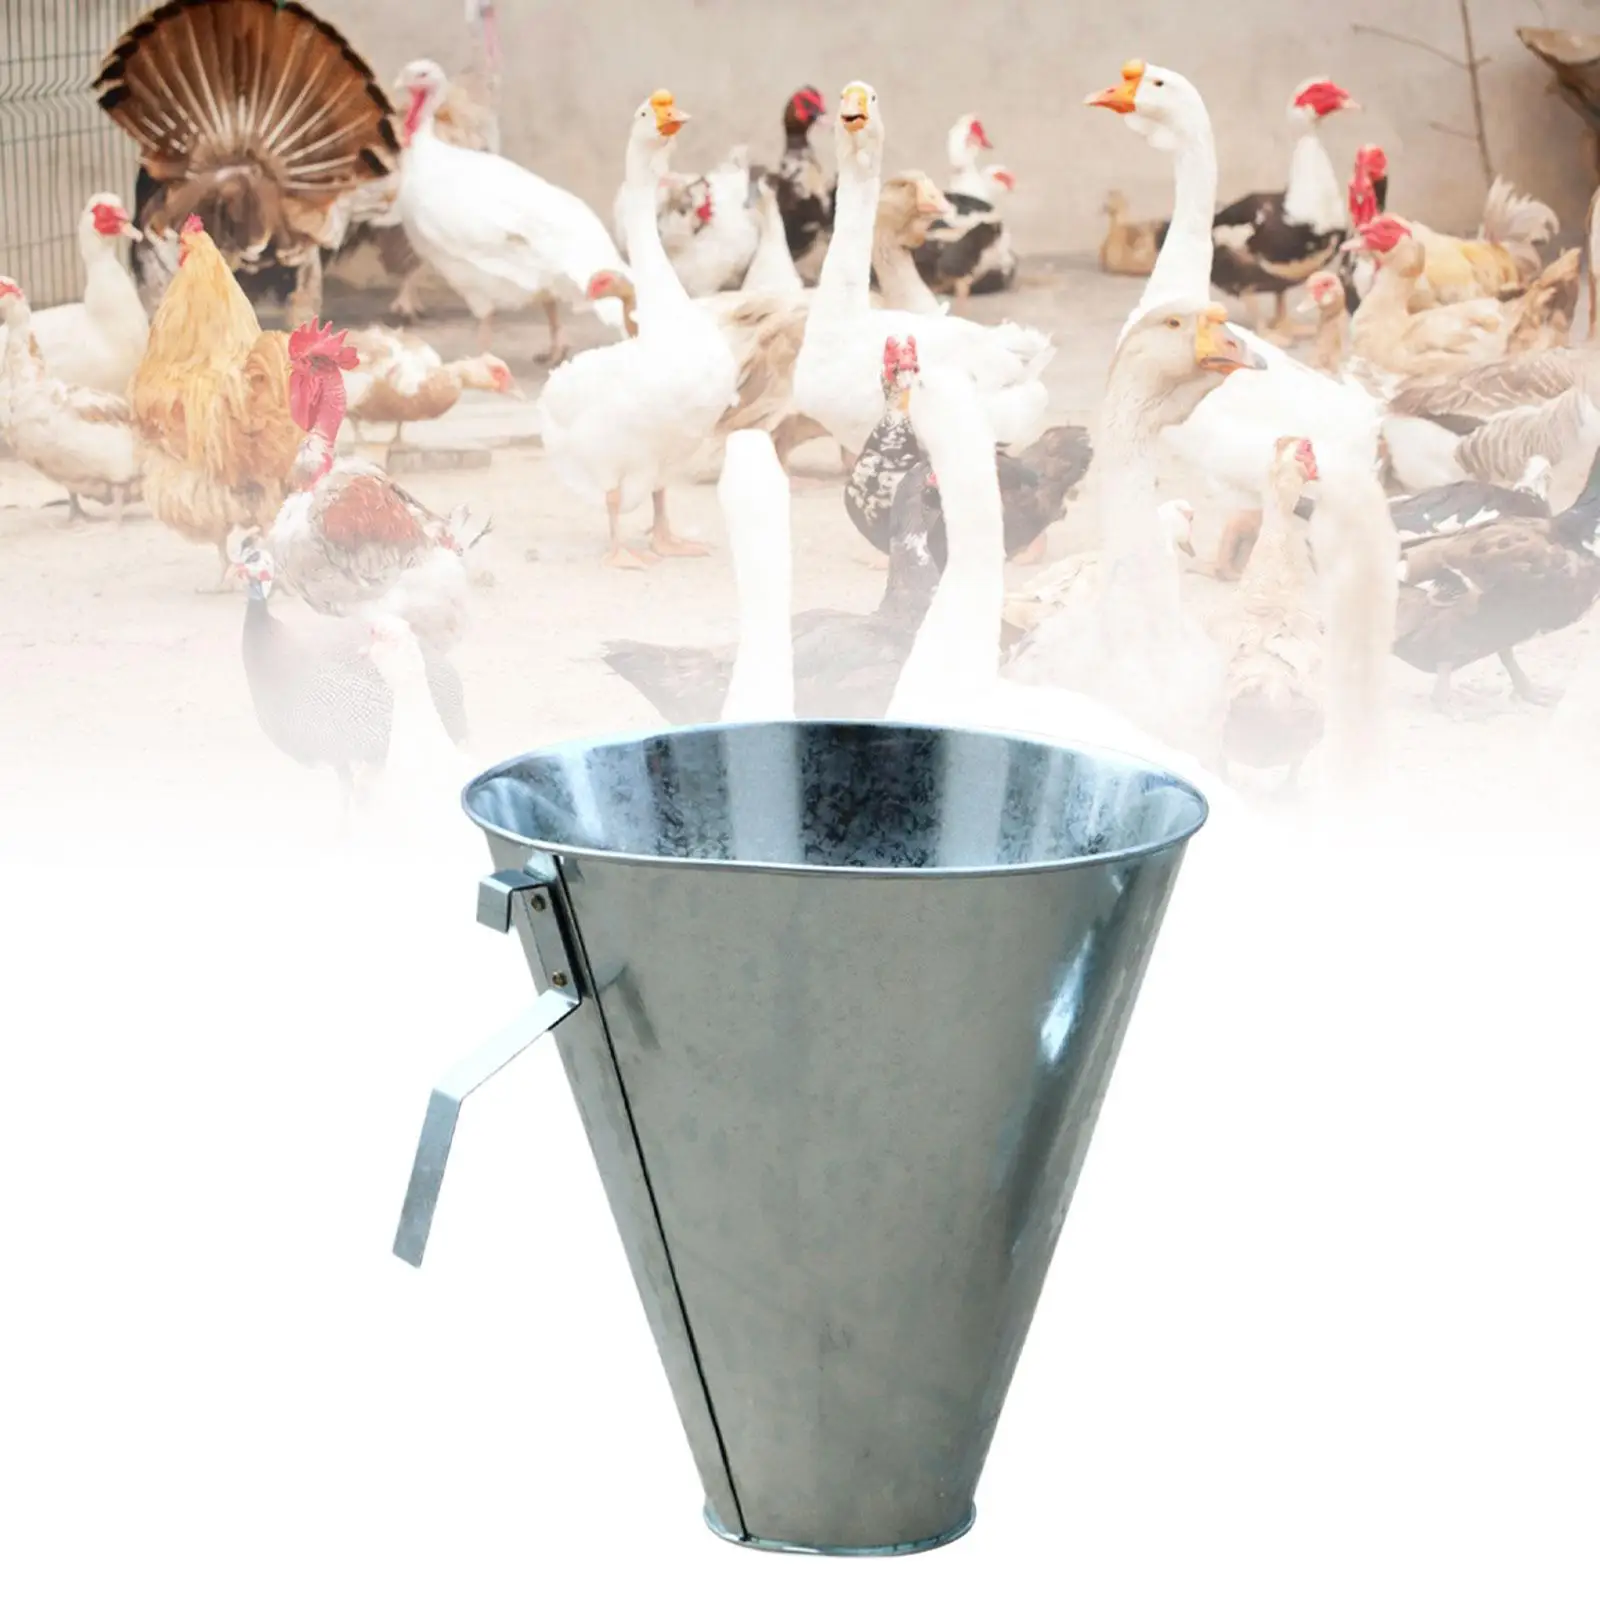 Poultry Restraining Cone Accs Chicken Bleeding Funnel for Duck Birds Chicken